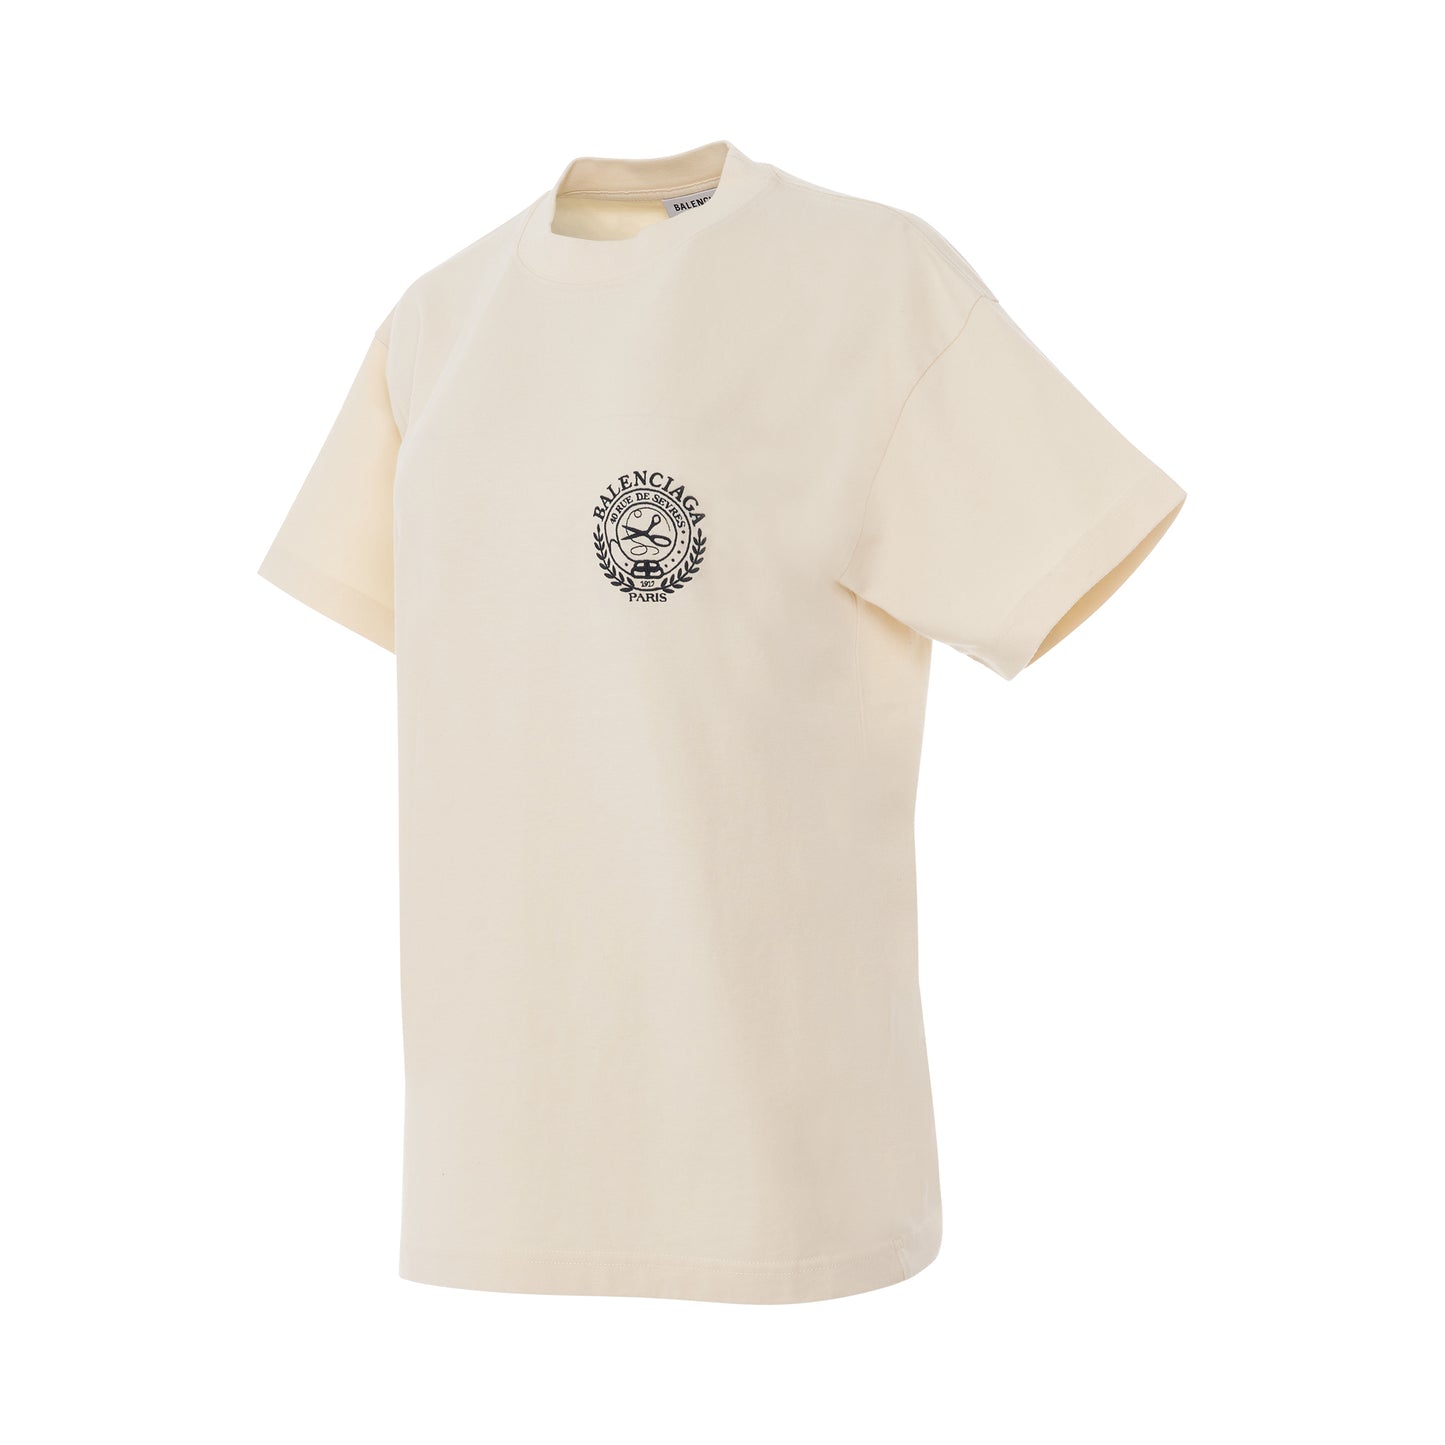 Scissors Crest Embroidered Vintage Jersey T-Shirt in Cream